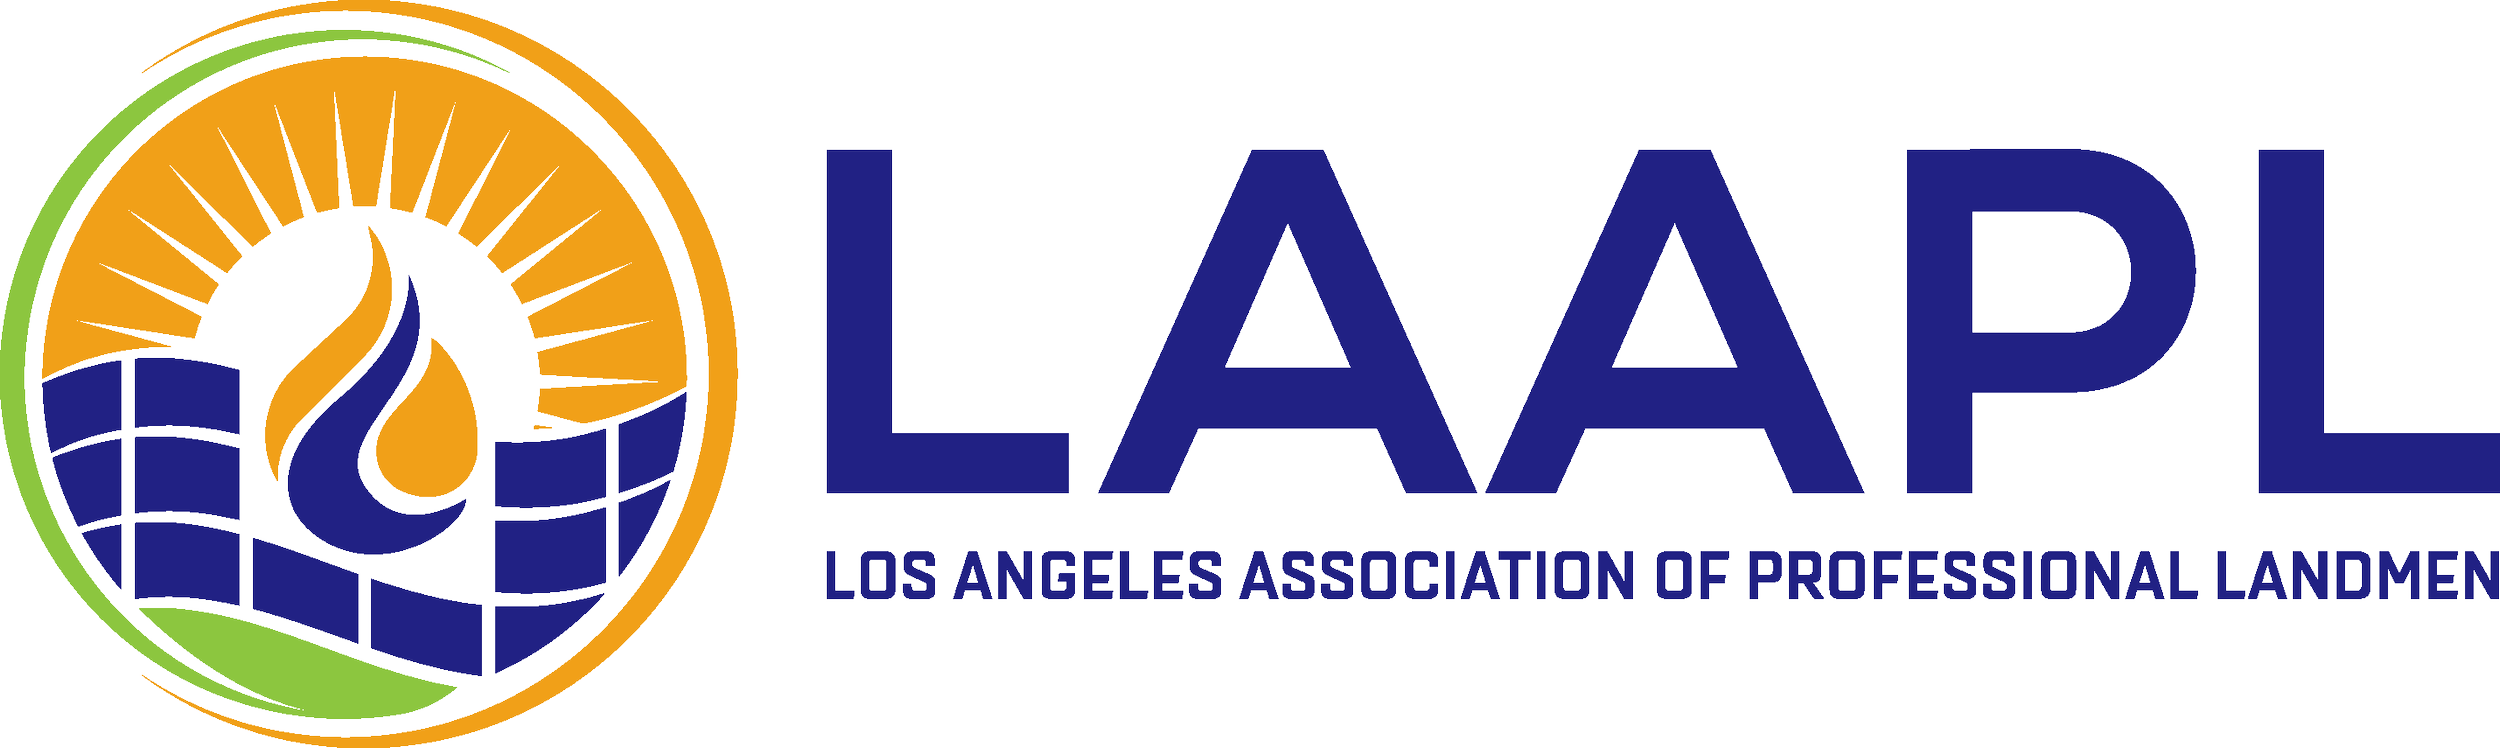 Los Angeles Association of Professional Landmen